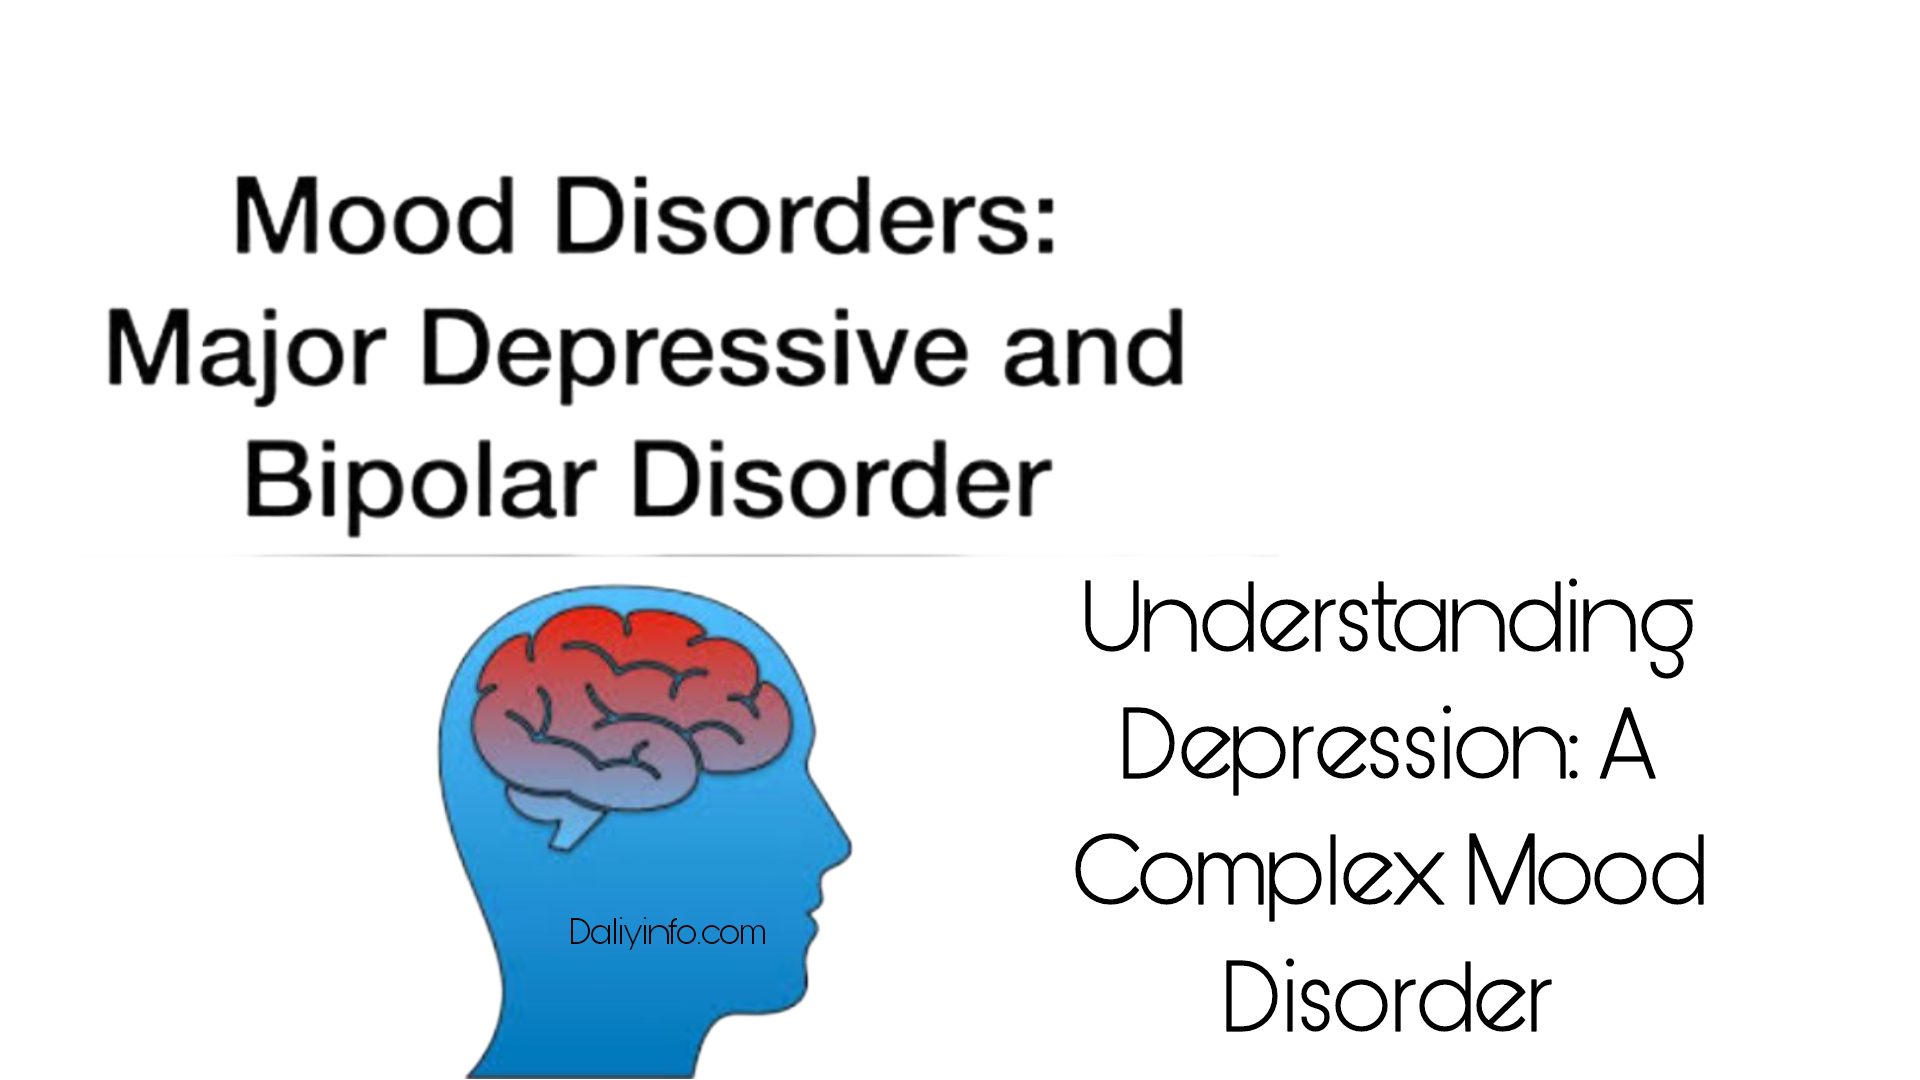 Understanding Depression: A Complex Mood Disorder